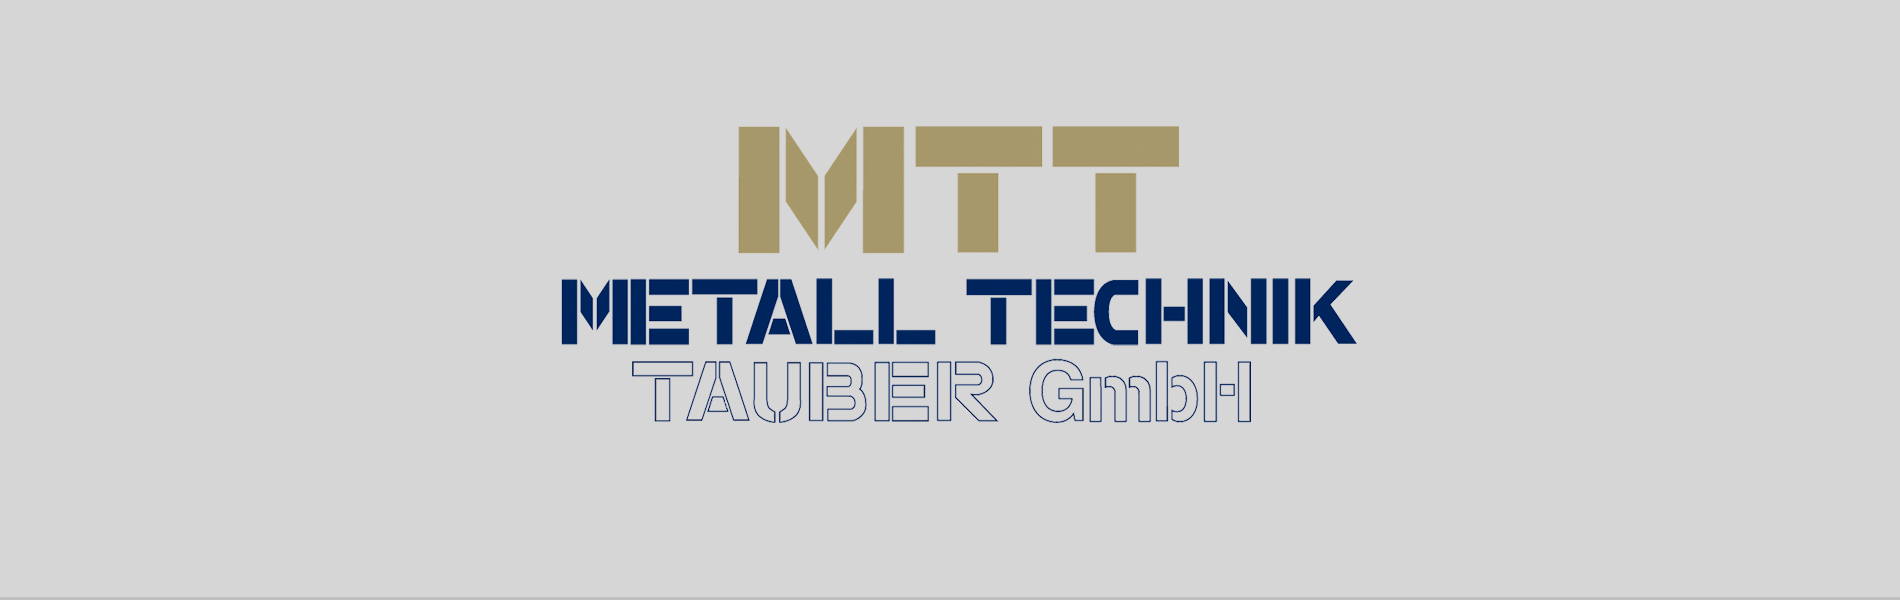 MTT-Metall-Technik_Tauber_Welcome2